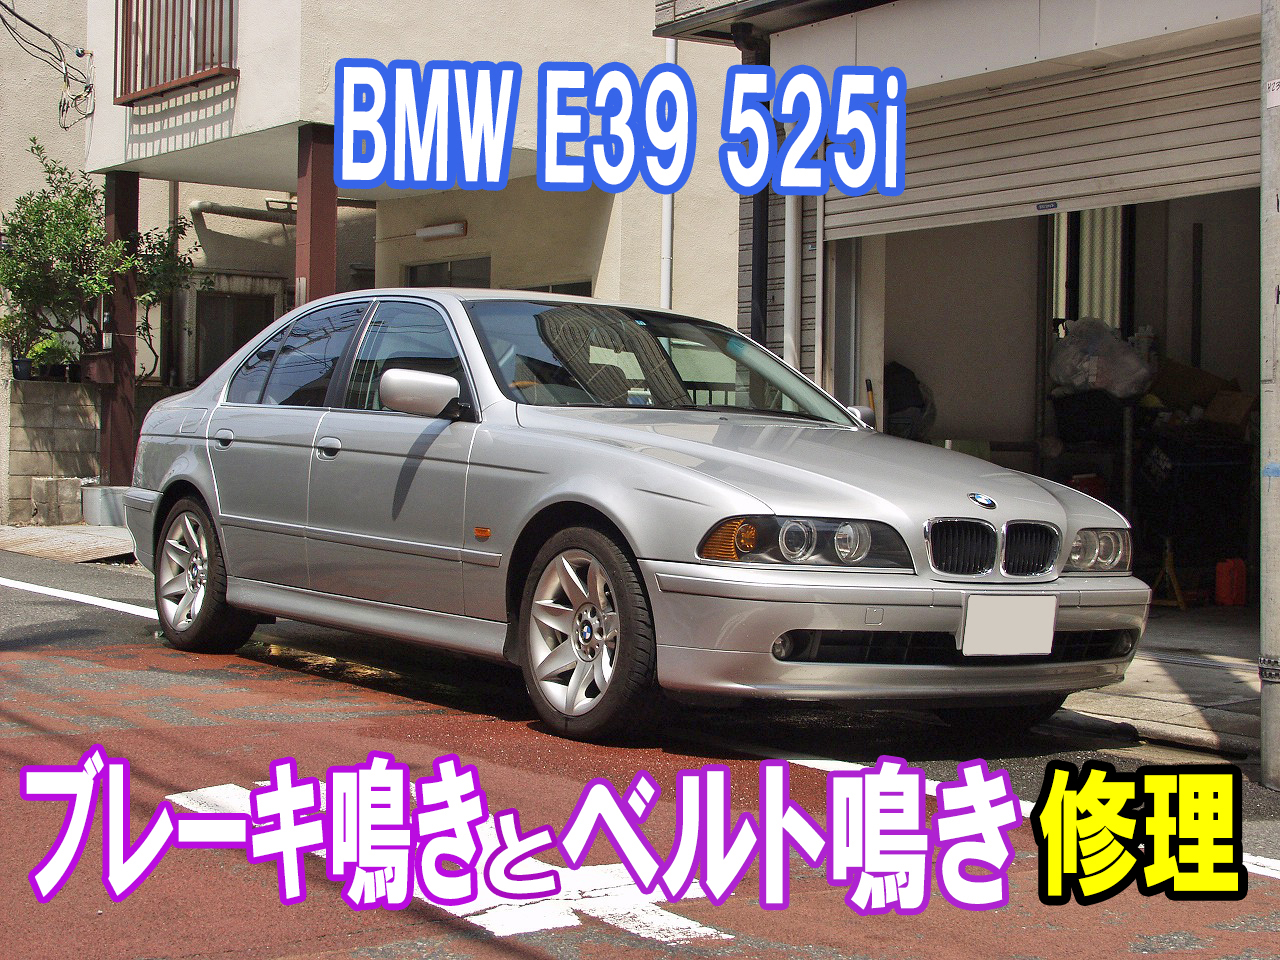 BMW E39 525iの格安修理のご紹介